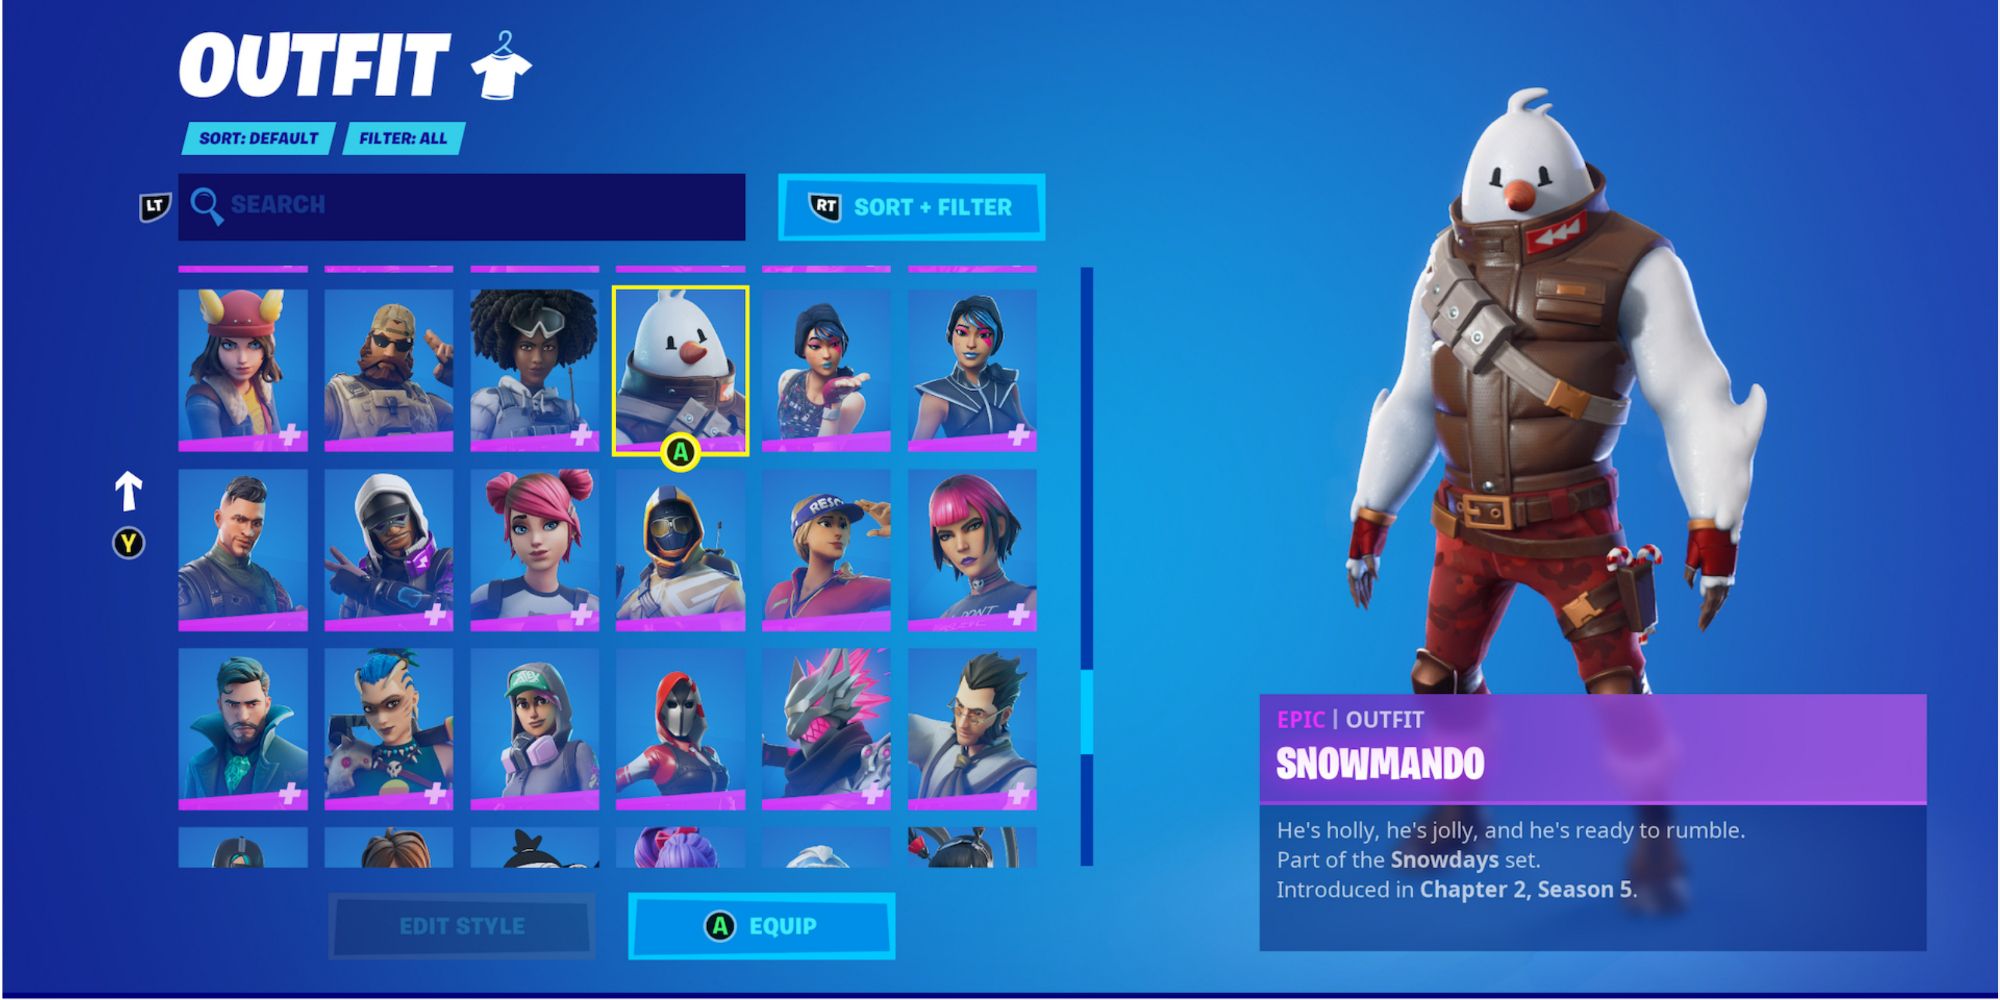 snowmando snowman character skin in fortnite